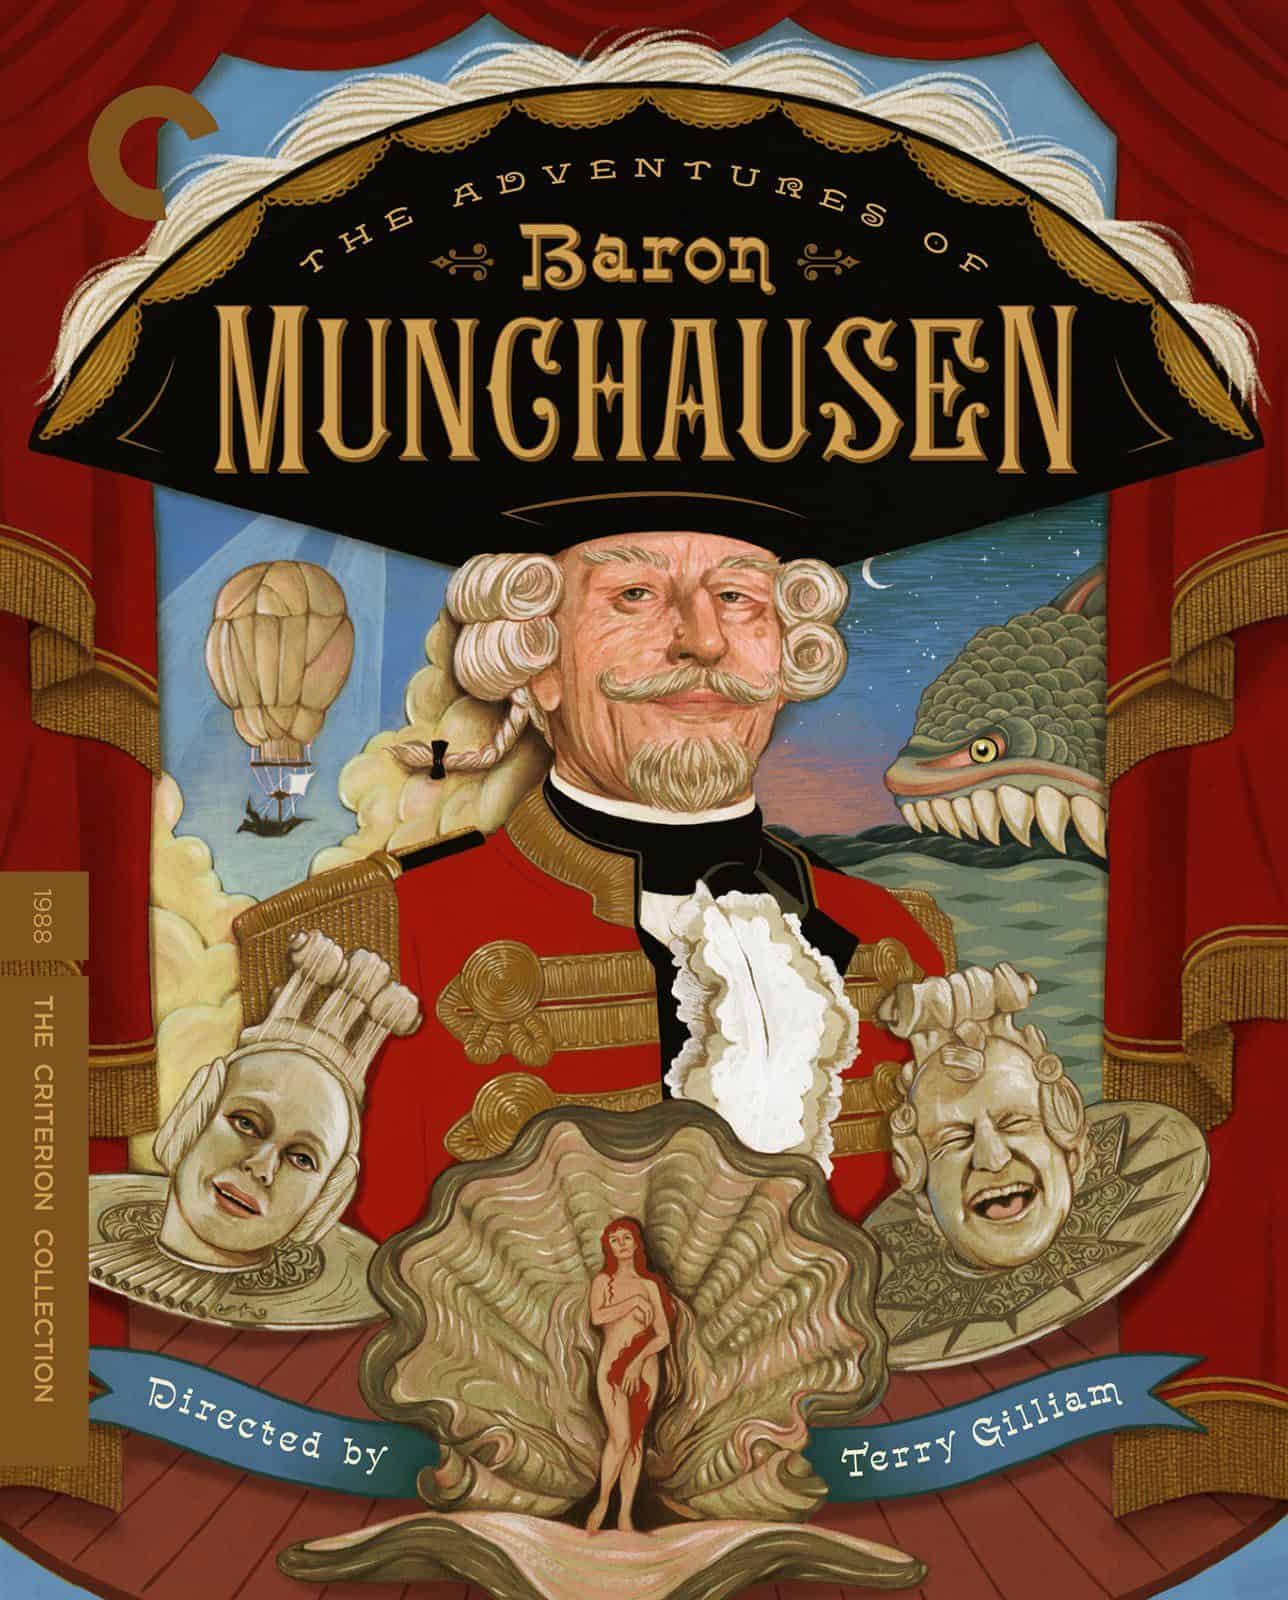 The Adventures of Baron Munchausen Poster